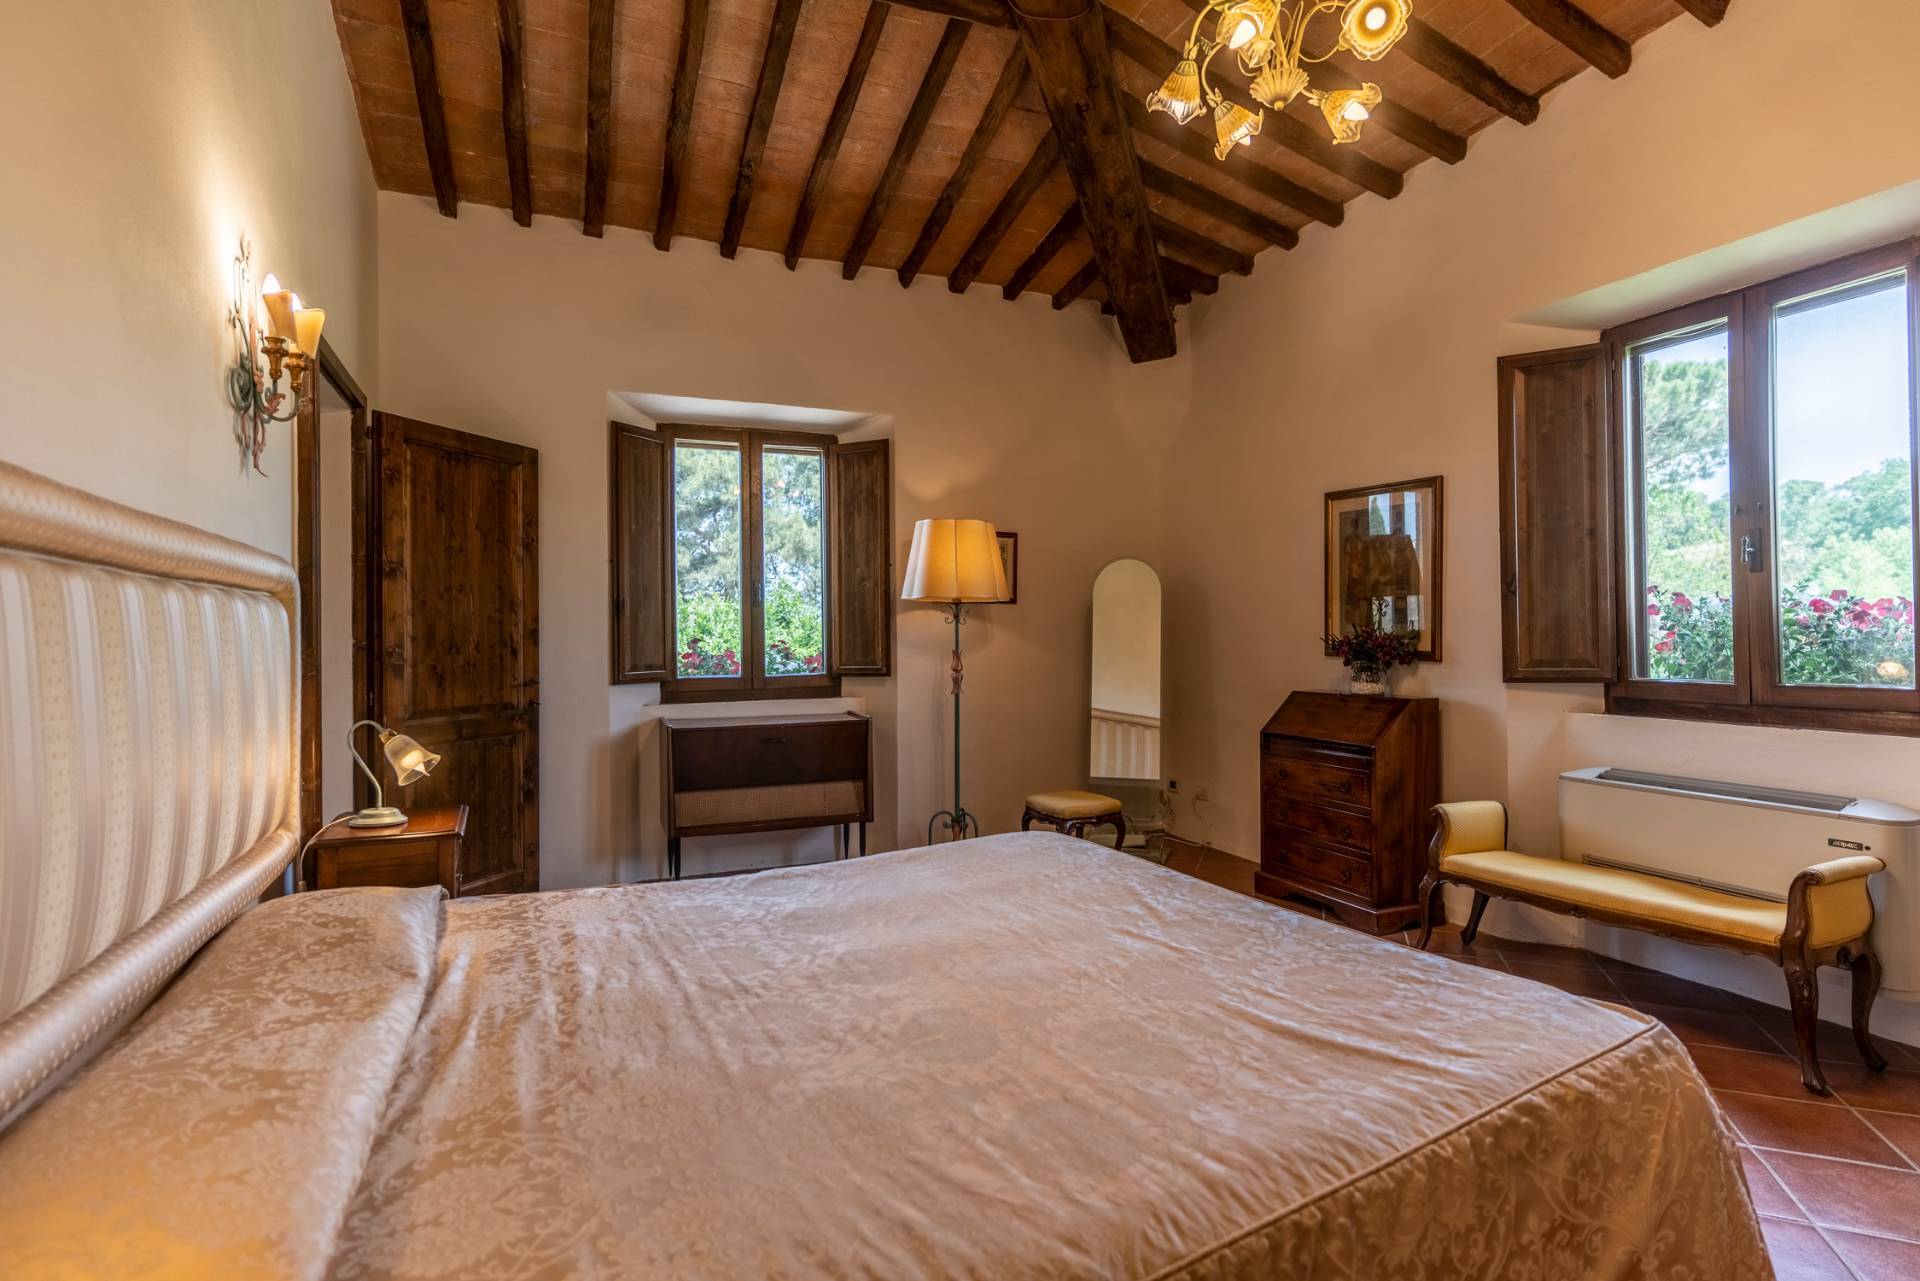 loc podernovo, Monteroni d'Arbia, Siena, 53014, IT, 12 Bedrooms Bedrooms, ,7 BathroomsBathrooms,Residential,For Sale,loc podernovo,1483139